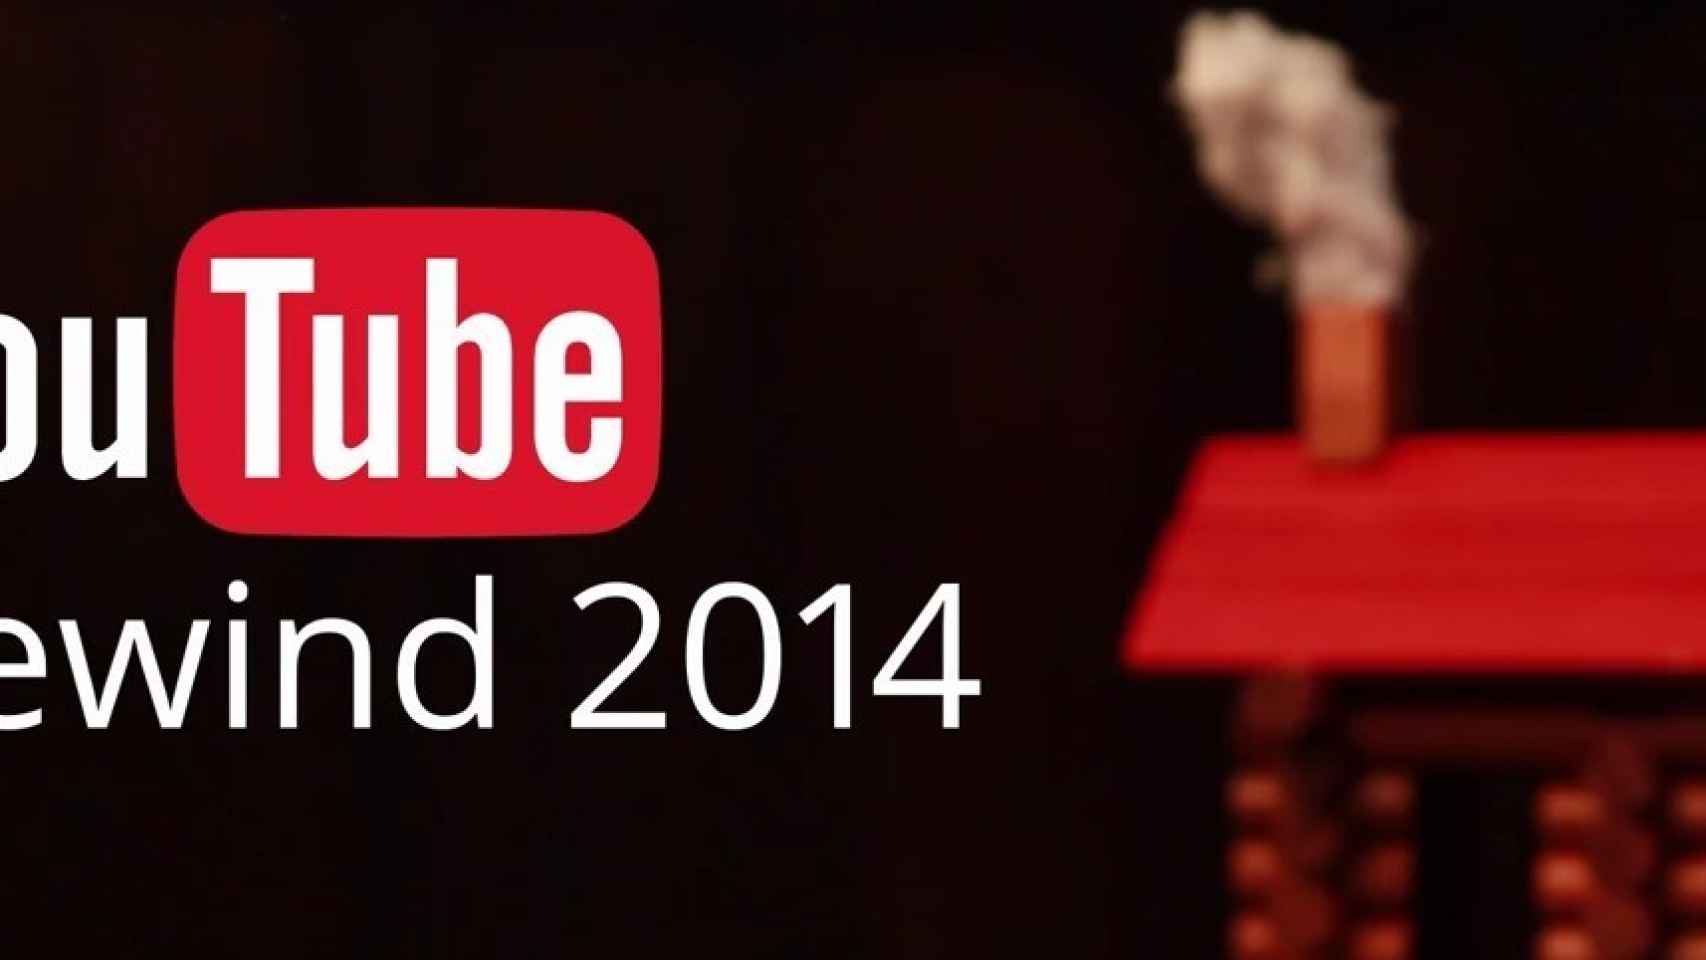 youtube-rewind-2014